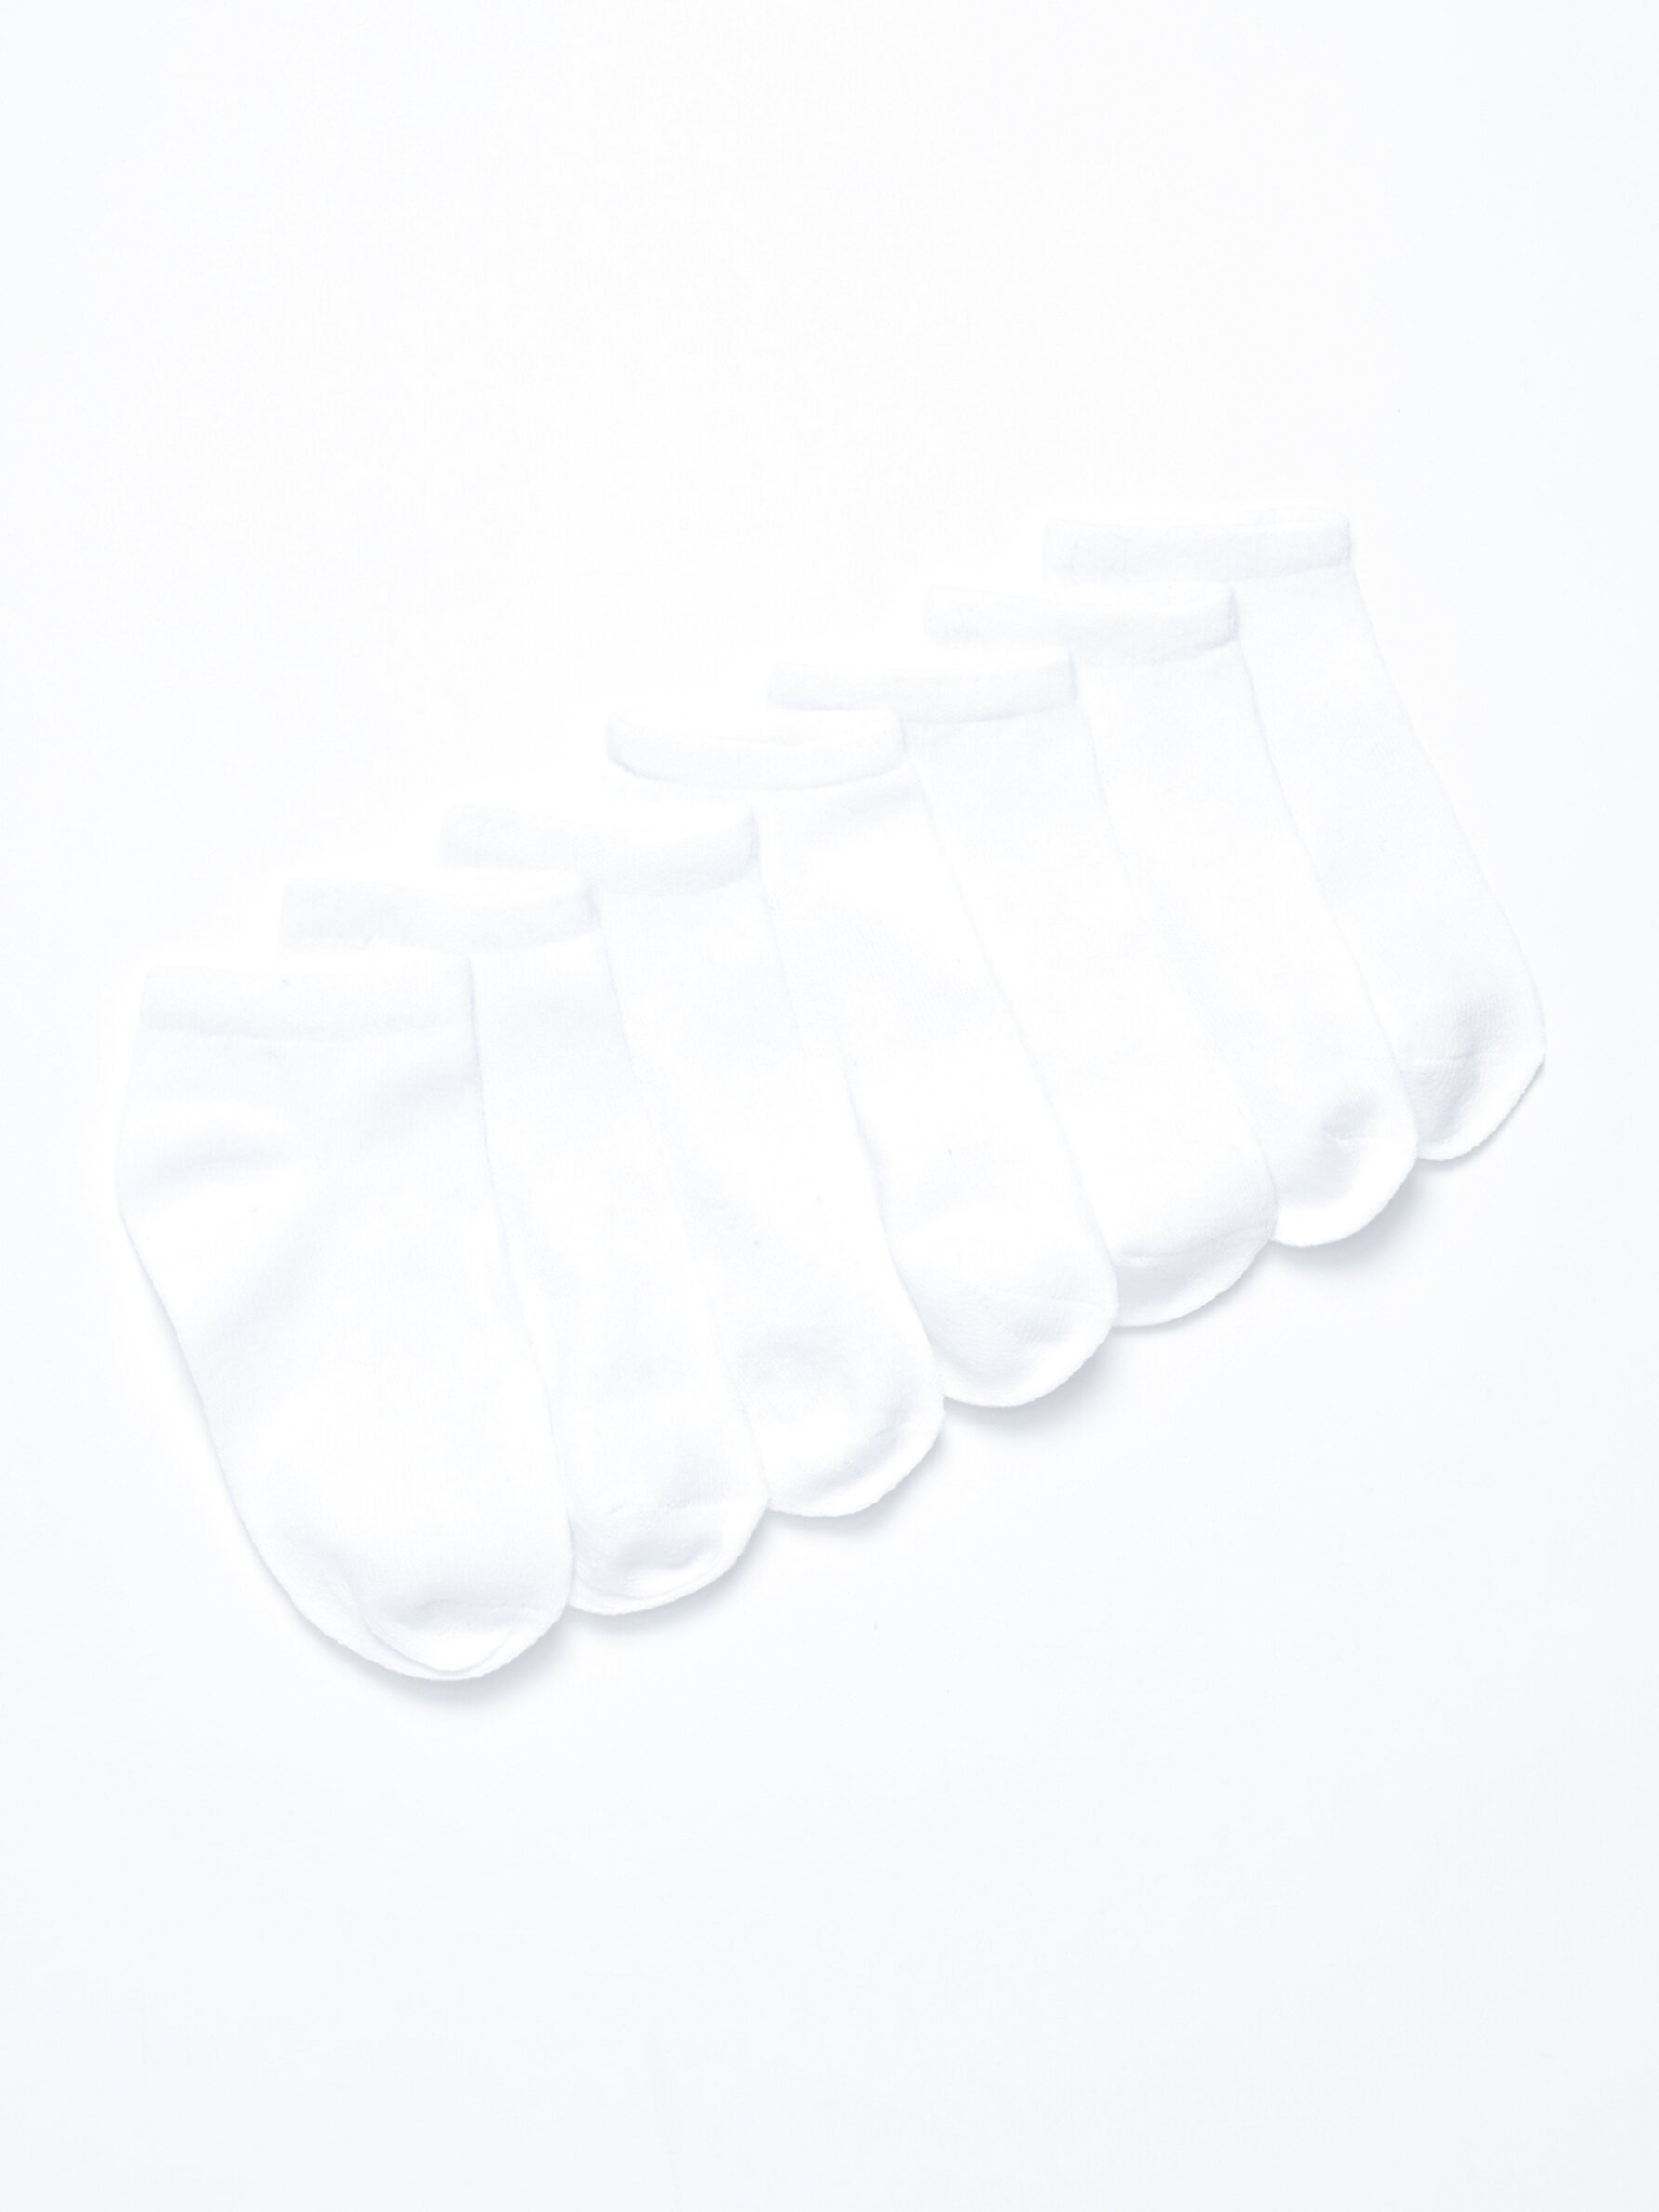 Pack 10 calcetines tobilleros - Negro/Blanco - MUJER